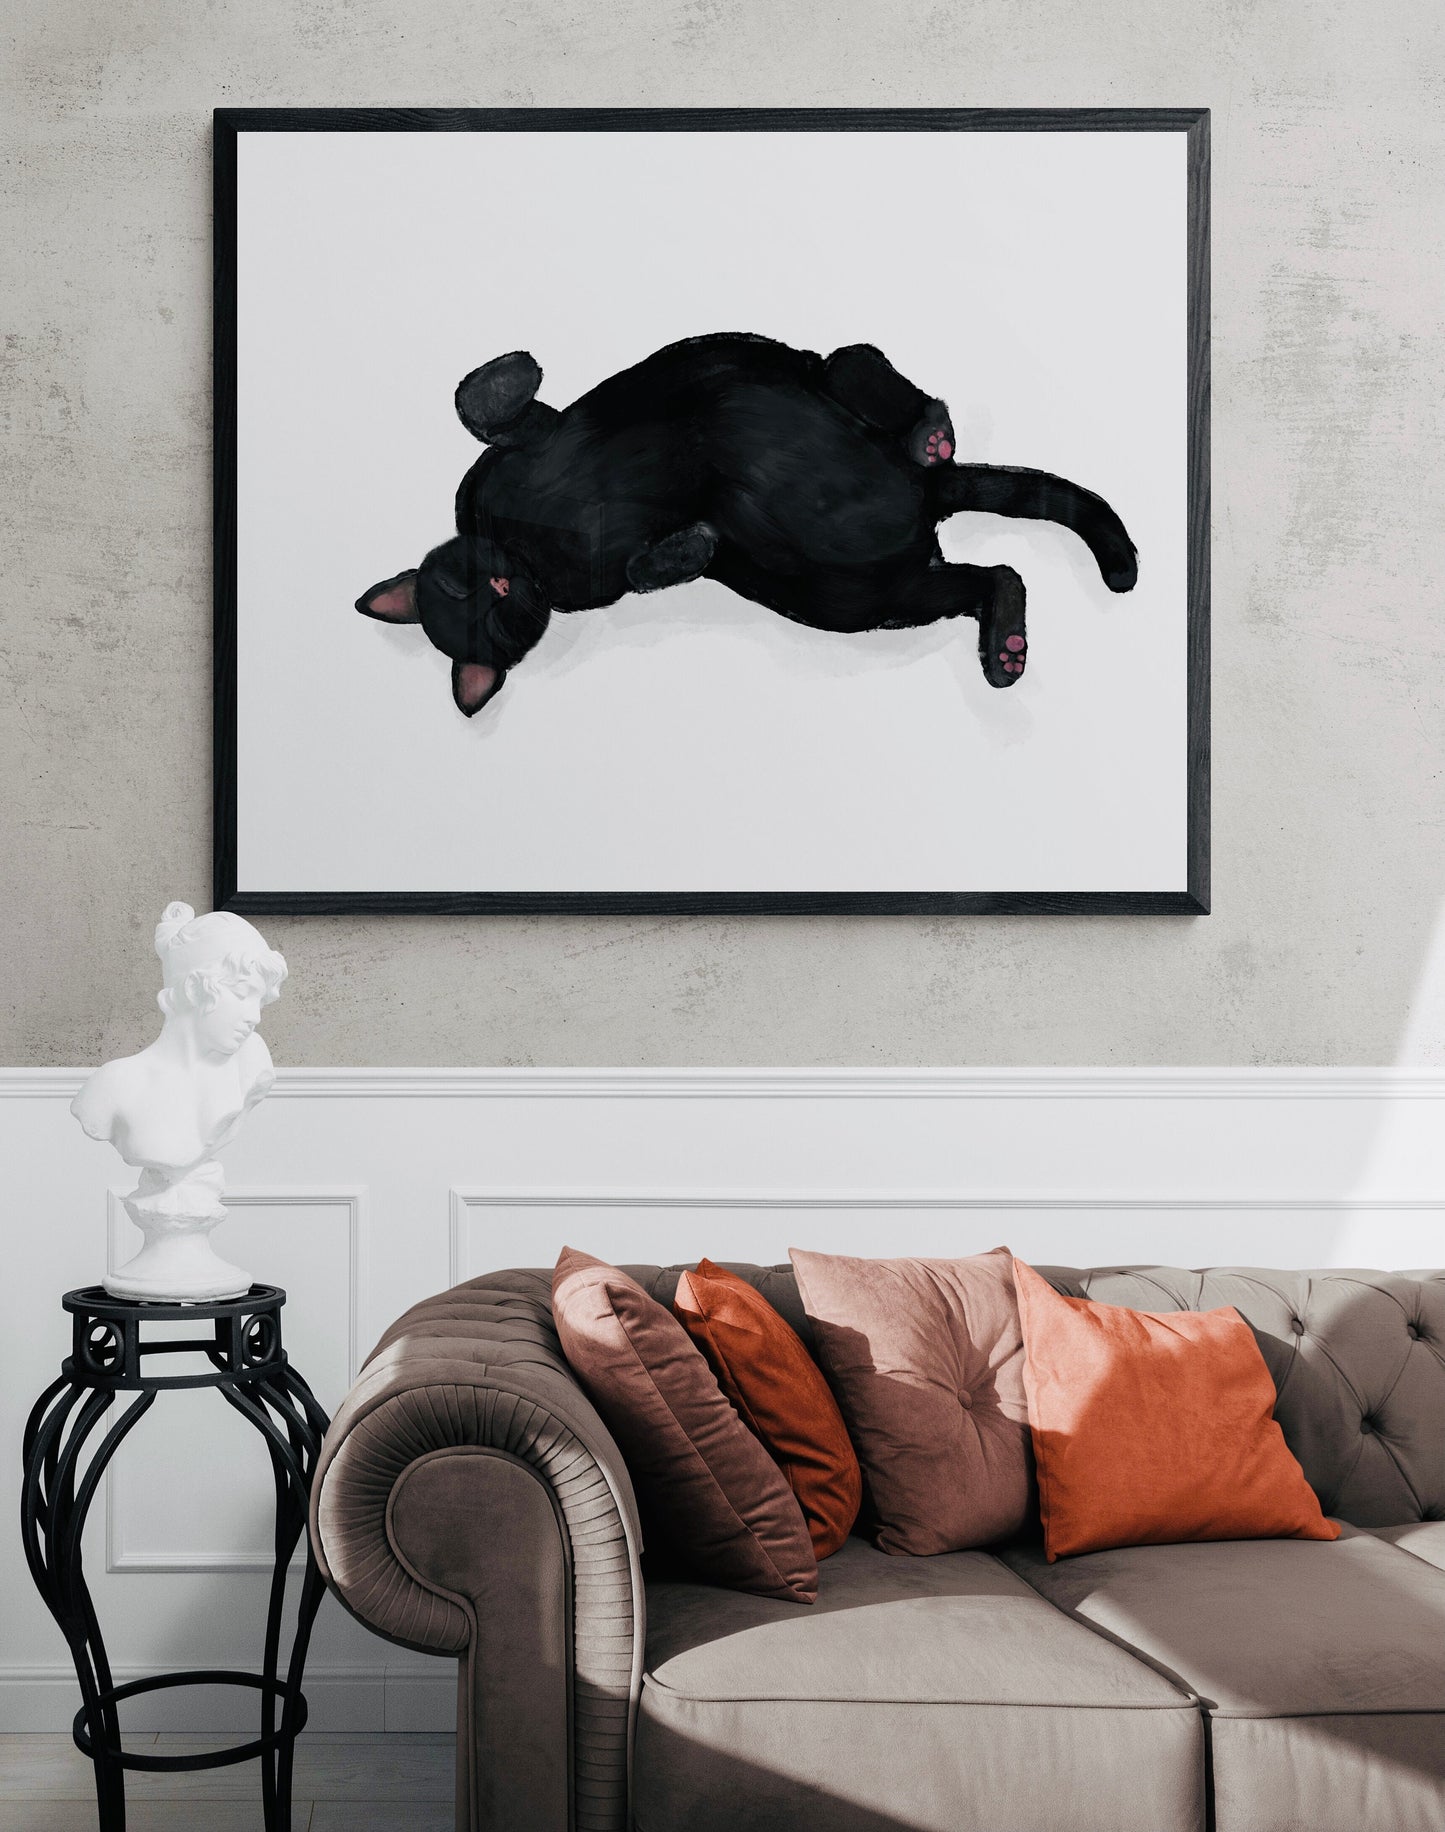 Sleeping Black Cat Print, Sleeping Cat Artwork, Sleeping Black Cat Art, Cat Illustration, Home Decor, Sleeping Cat Painting, Cat Lover